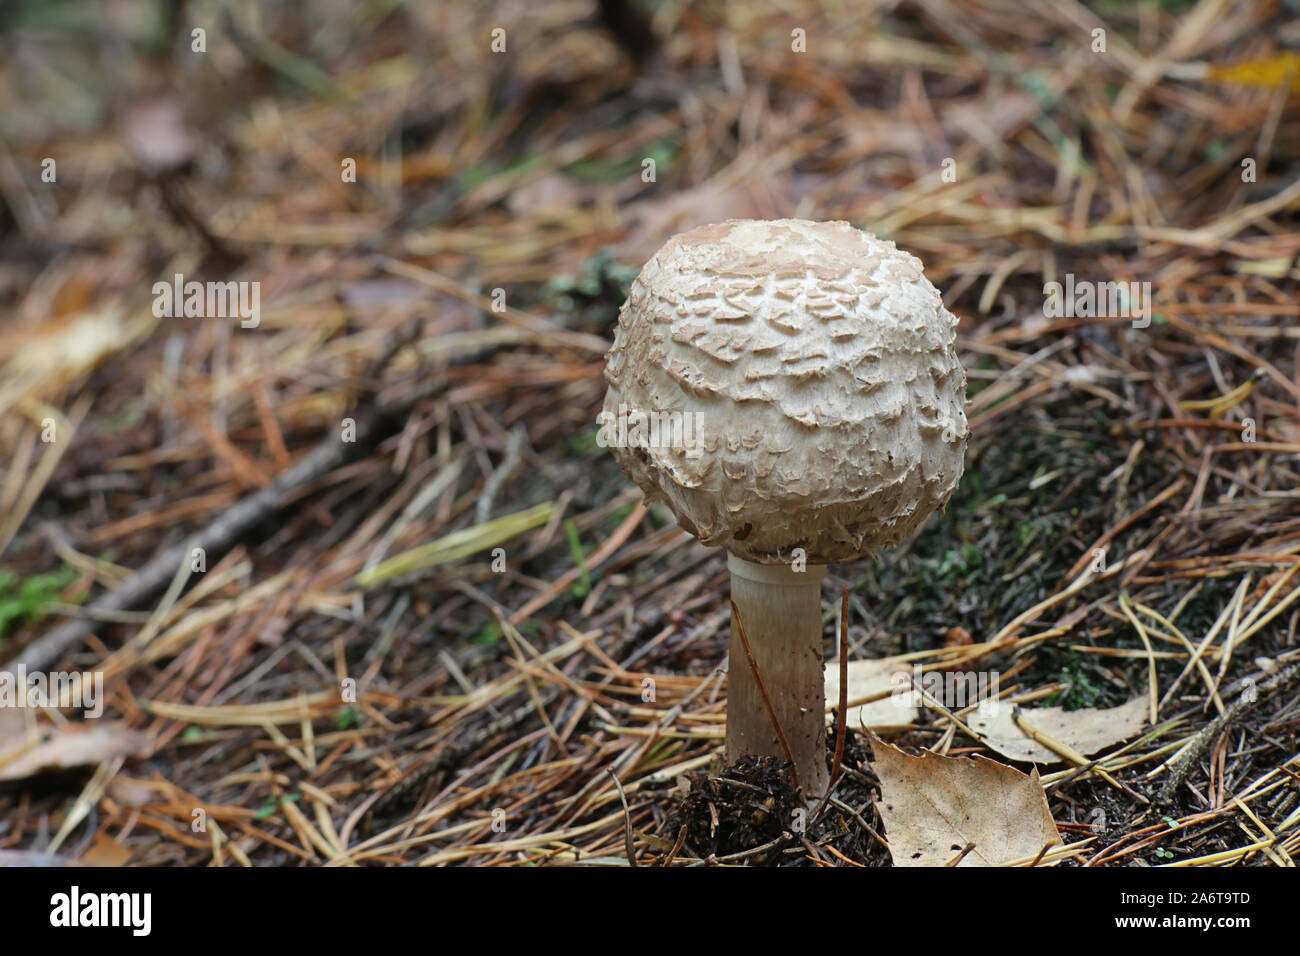 Chlorophyllum olivieri, formerly Macrolepiota olivieri, known as Shaggy Parasol, wild edible mushroom from Finland Stock Photo